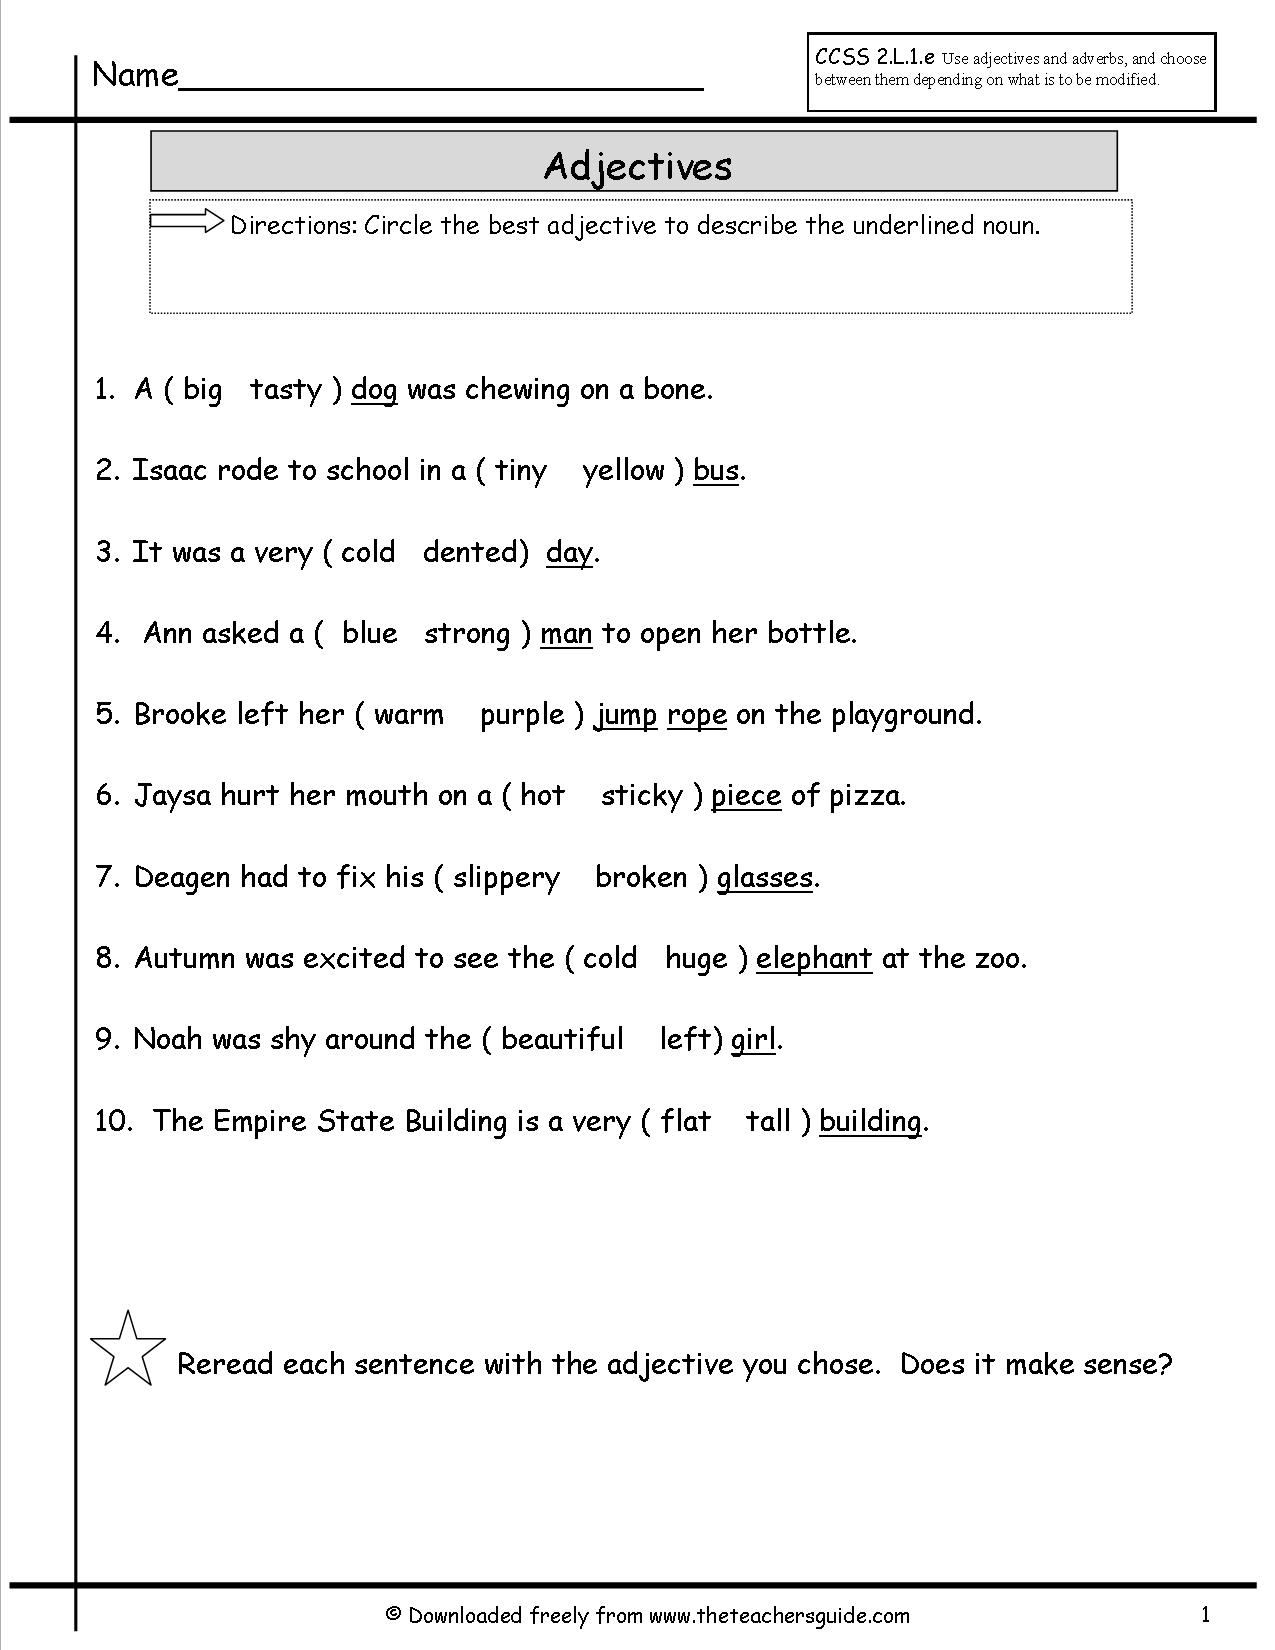 13 Best Images of Preposition Worksheet Grade 5 - Preposition Worksheet